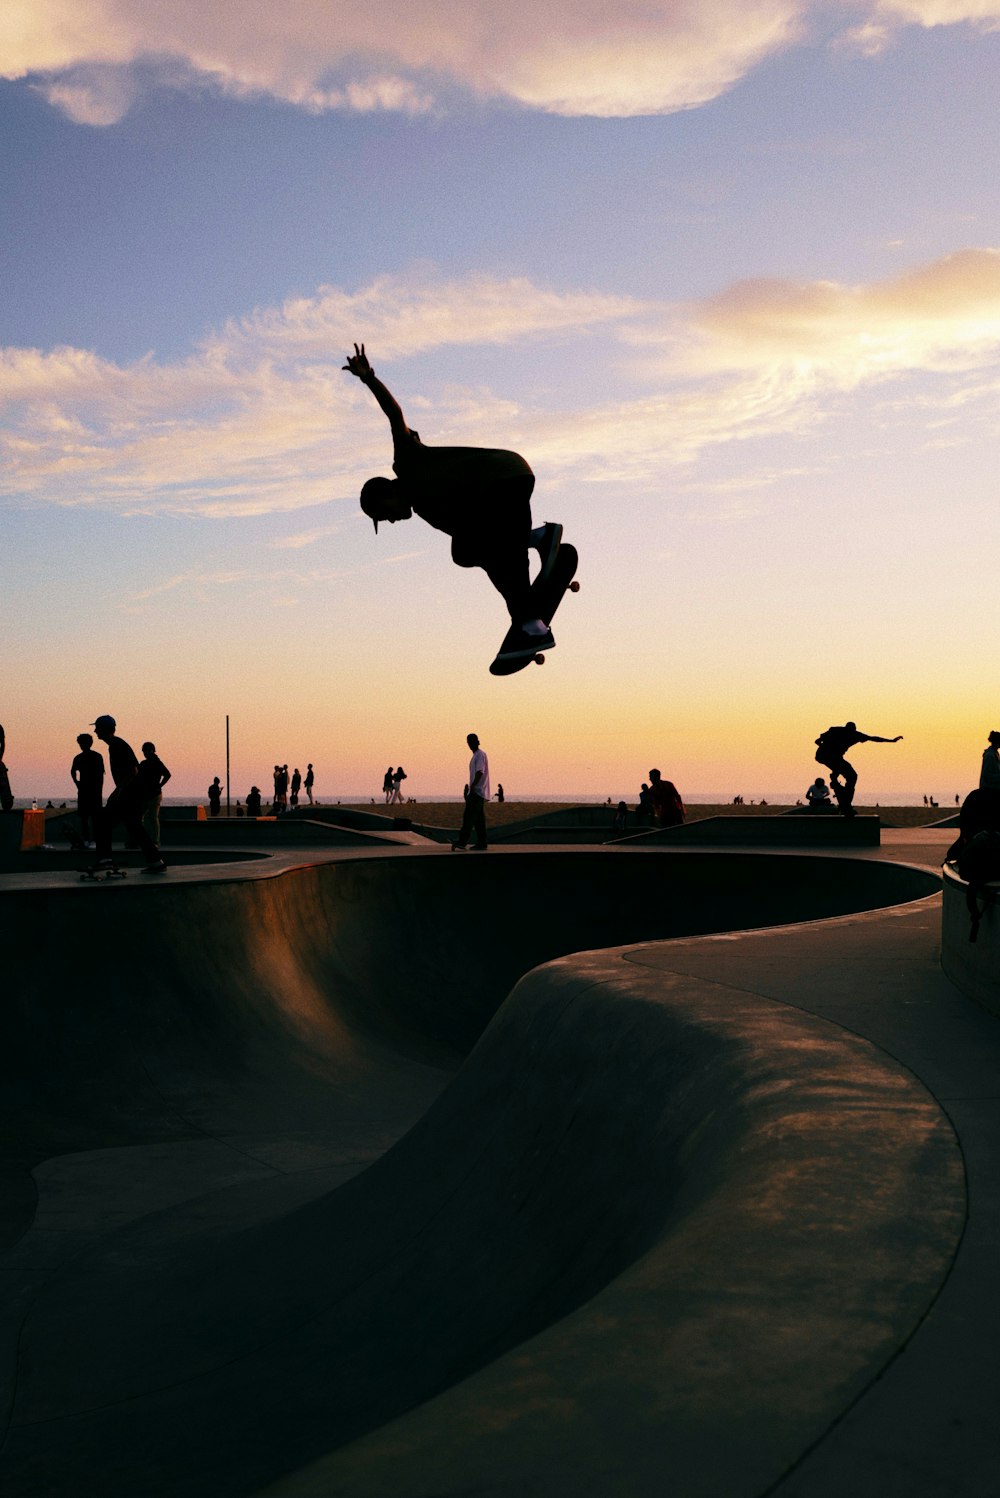 Skateboard Wallpapers: Free HD Download [500+ HQ] | Unsplash